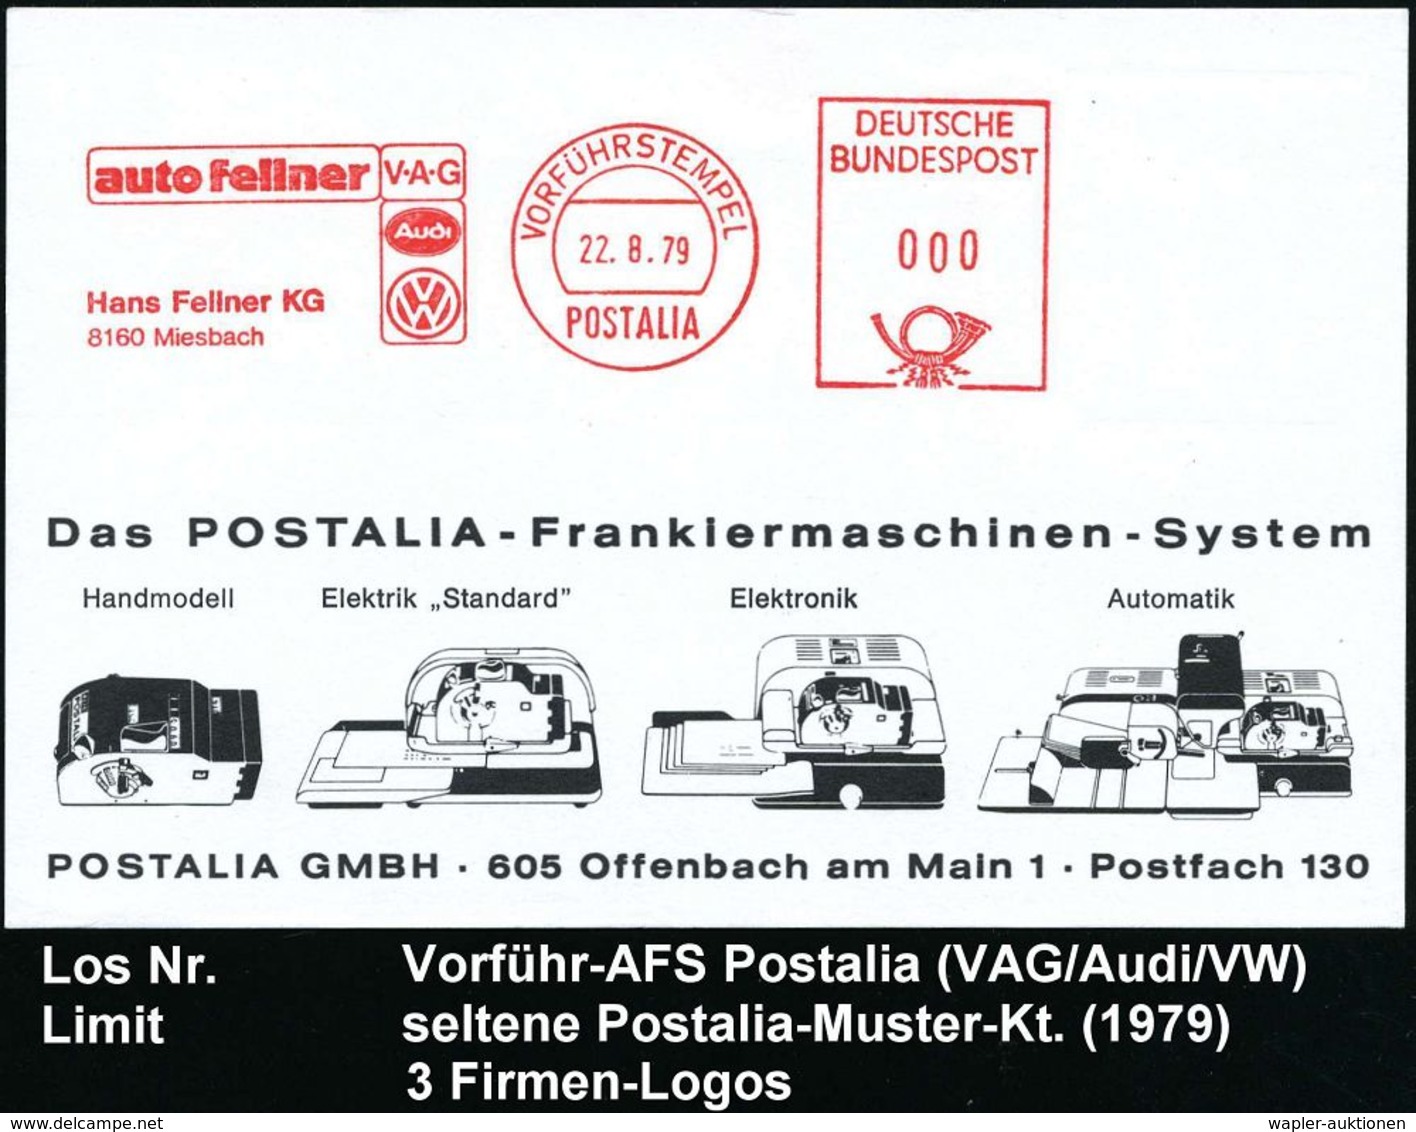 VOLKSWAGEN / VW / K.-D.-F.-WAGEN / PORSCHE : 8160 Miesbach 1979 (22.8.) AFS: VORFÜRHSTEMPEL/POSTALIA/auto Fellner/V-A-G/ - Cars